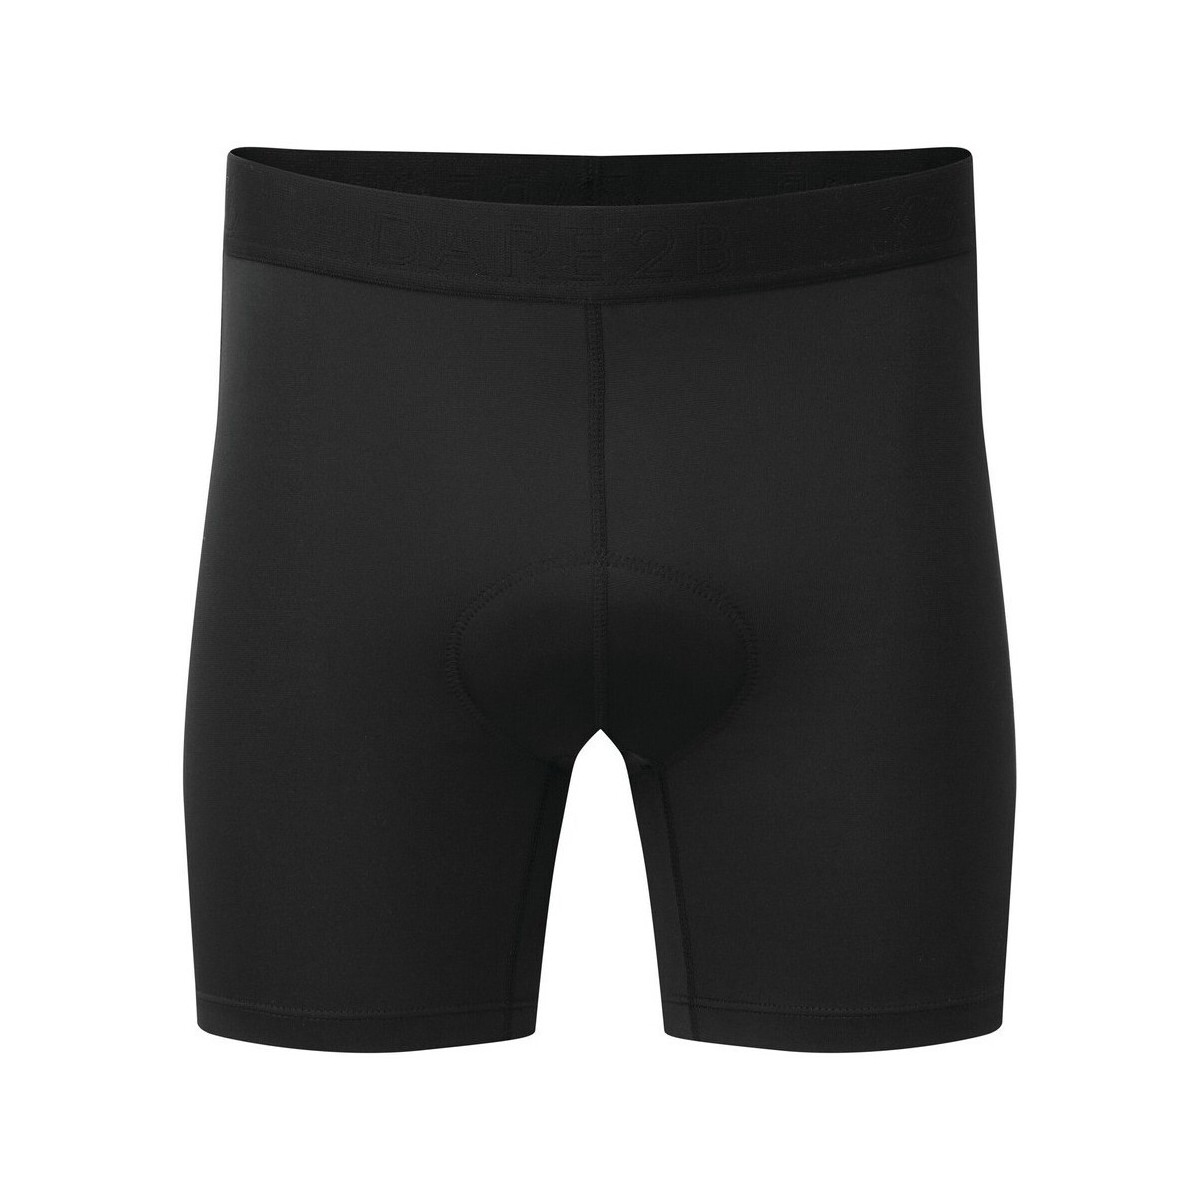 textil Hombre Shorts / Bermudas Dare 2b Cyclical Negro